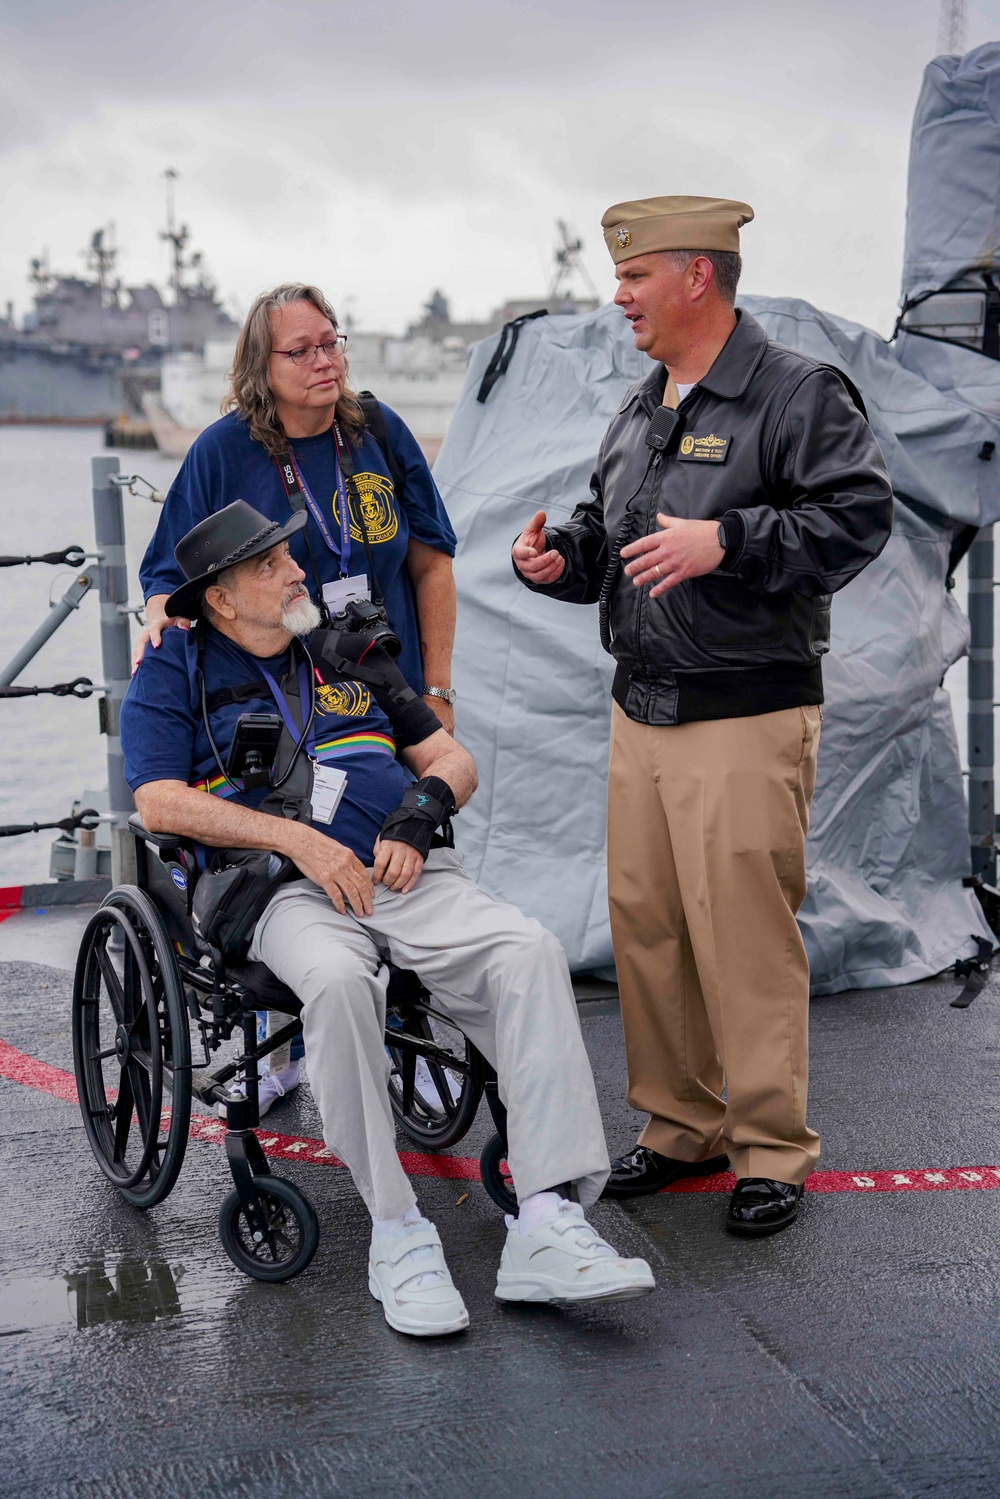 DVIDS - Images - USS Princeton Veterans Visit the Ship as Part of 